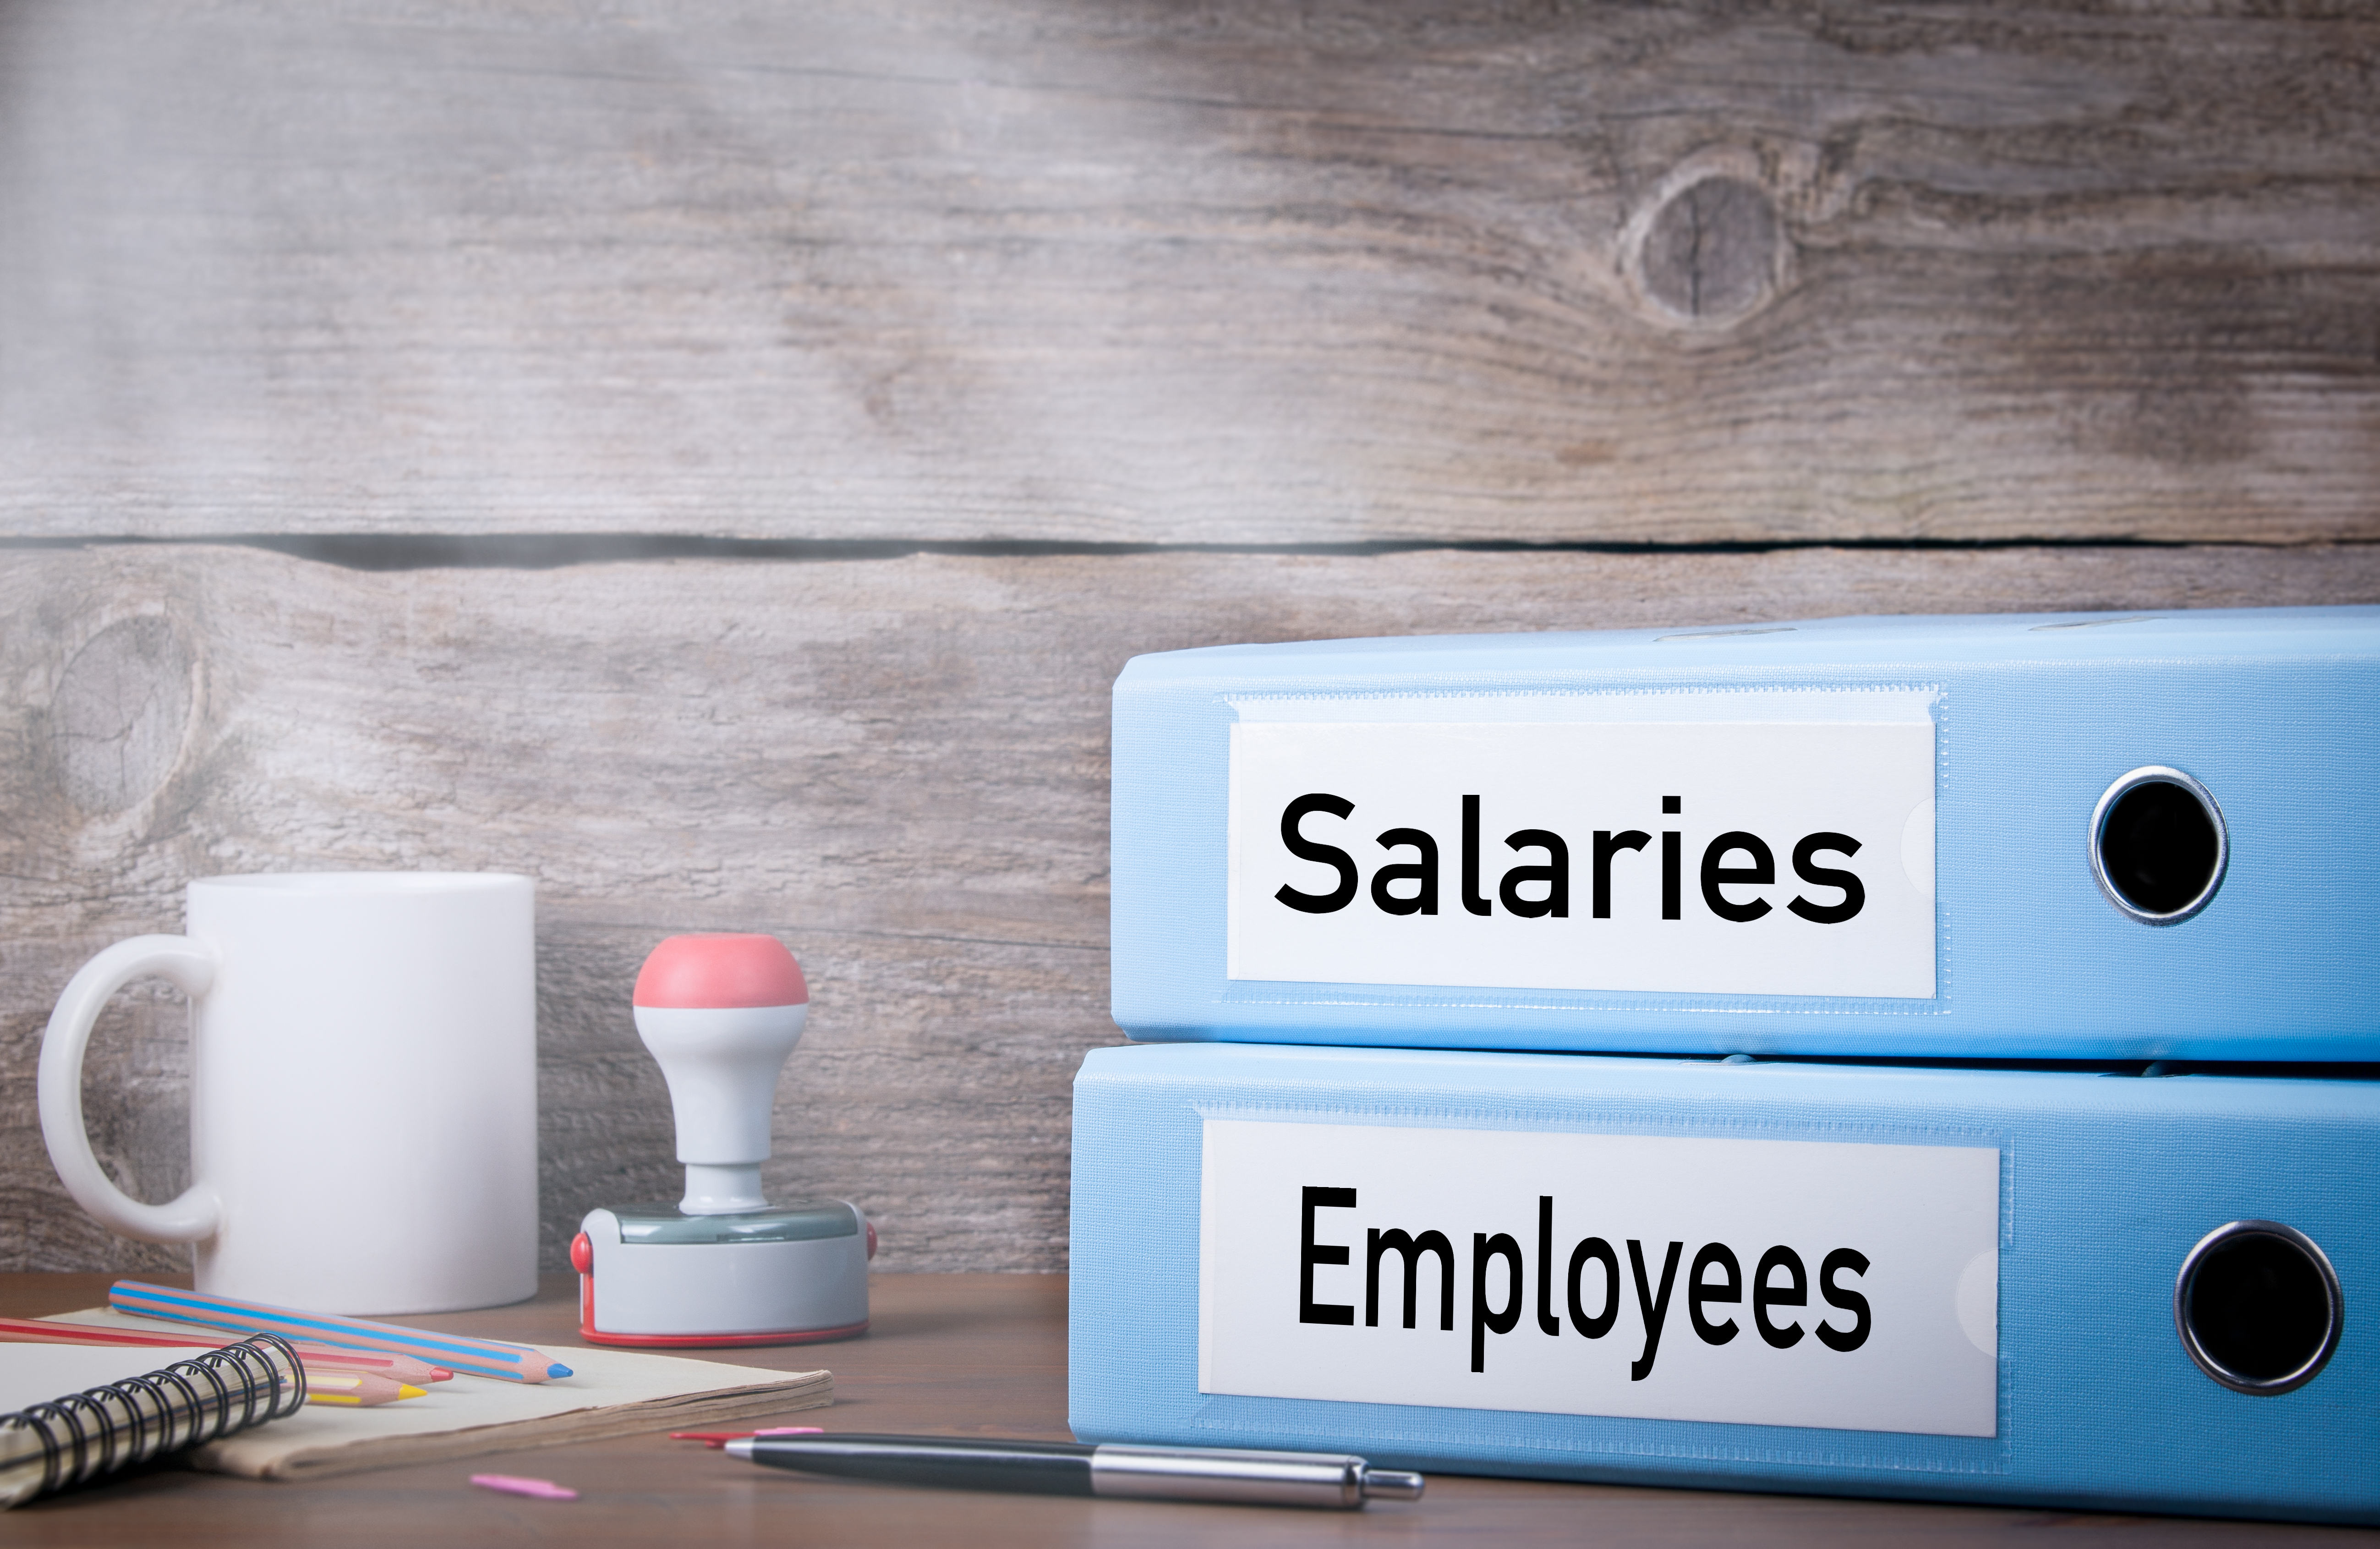 NYC Mandates Posting Salary Information in Job Listings